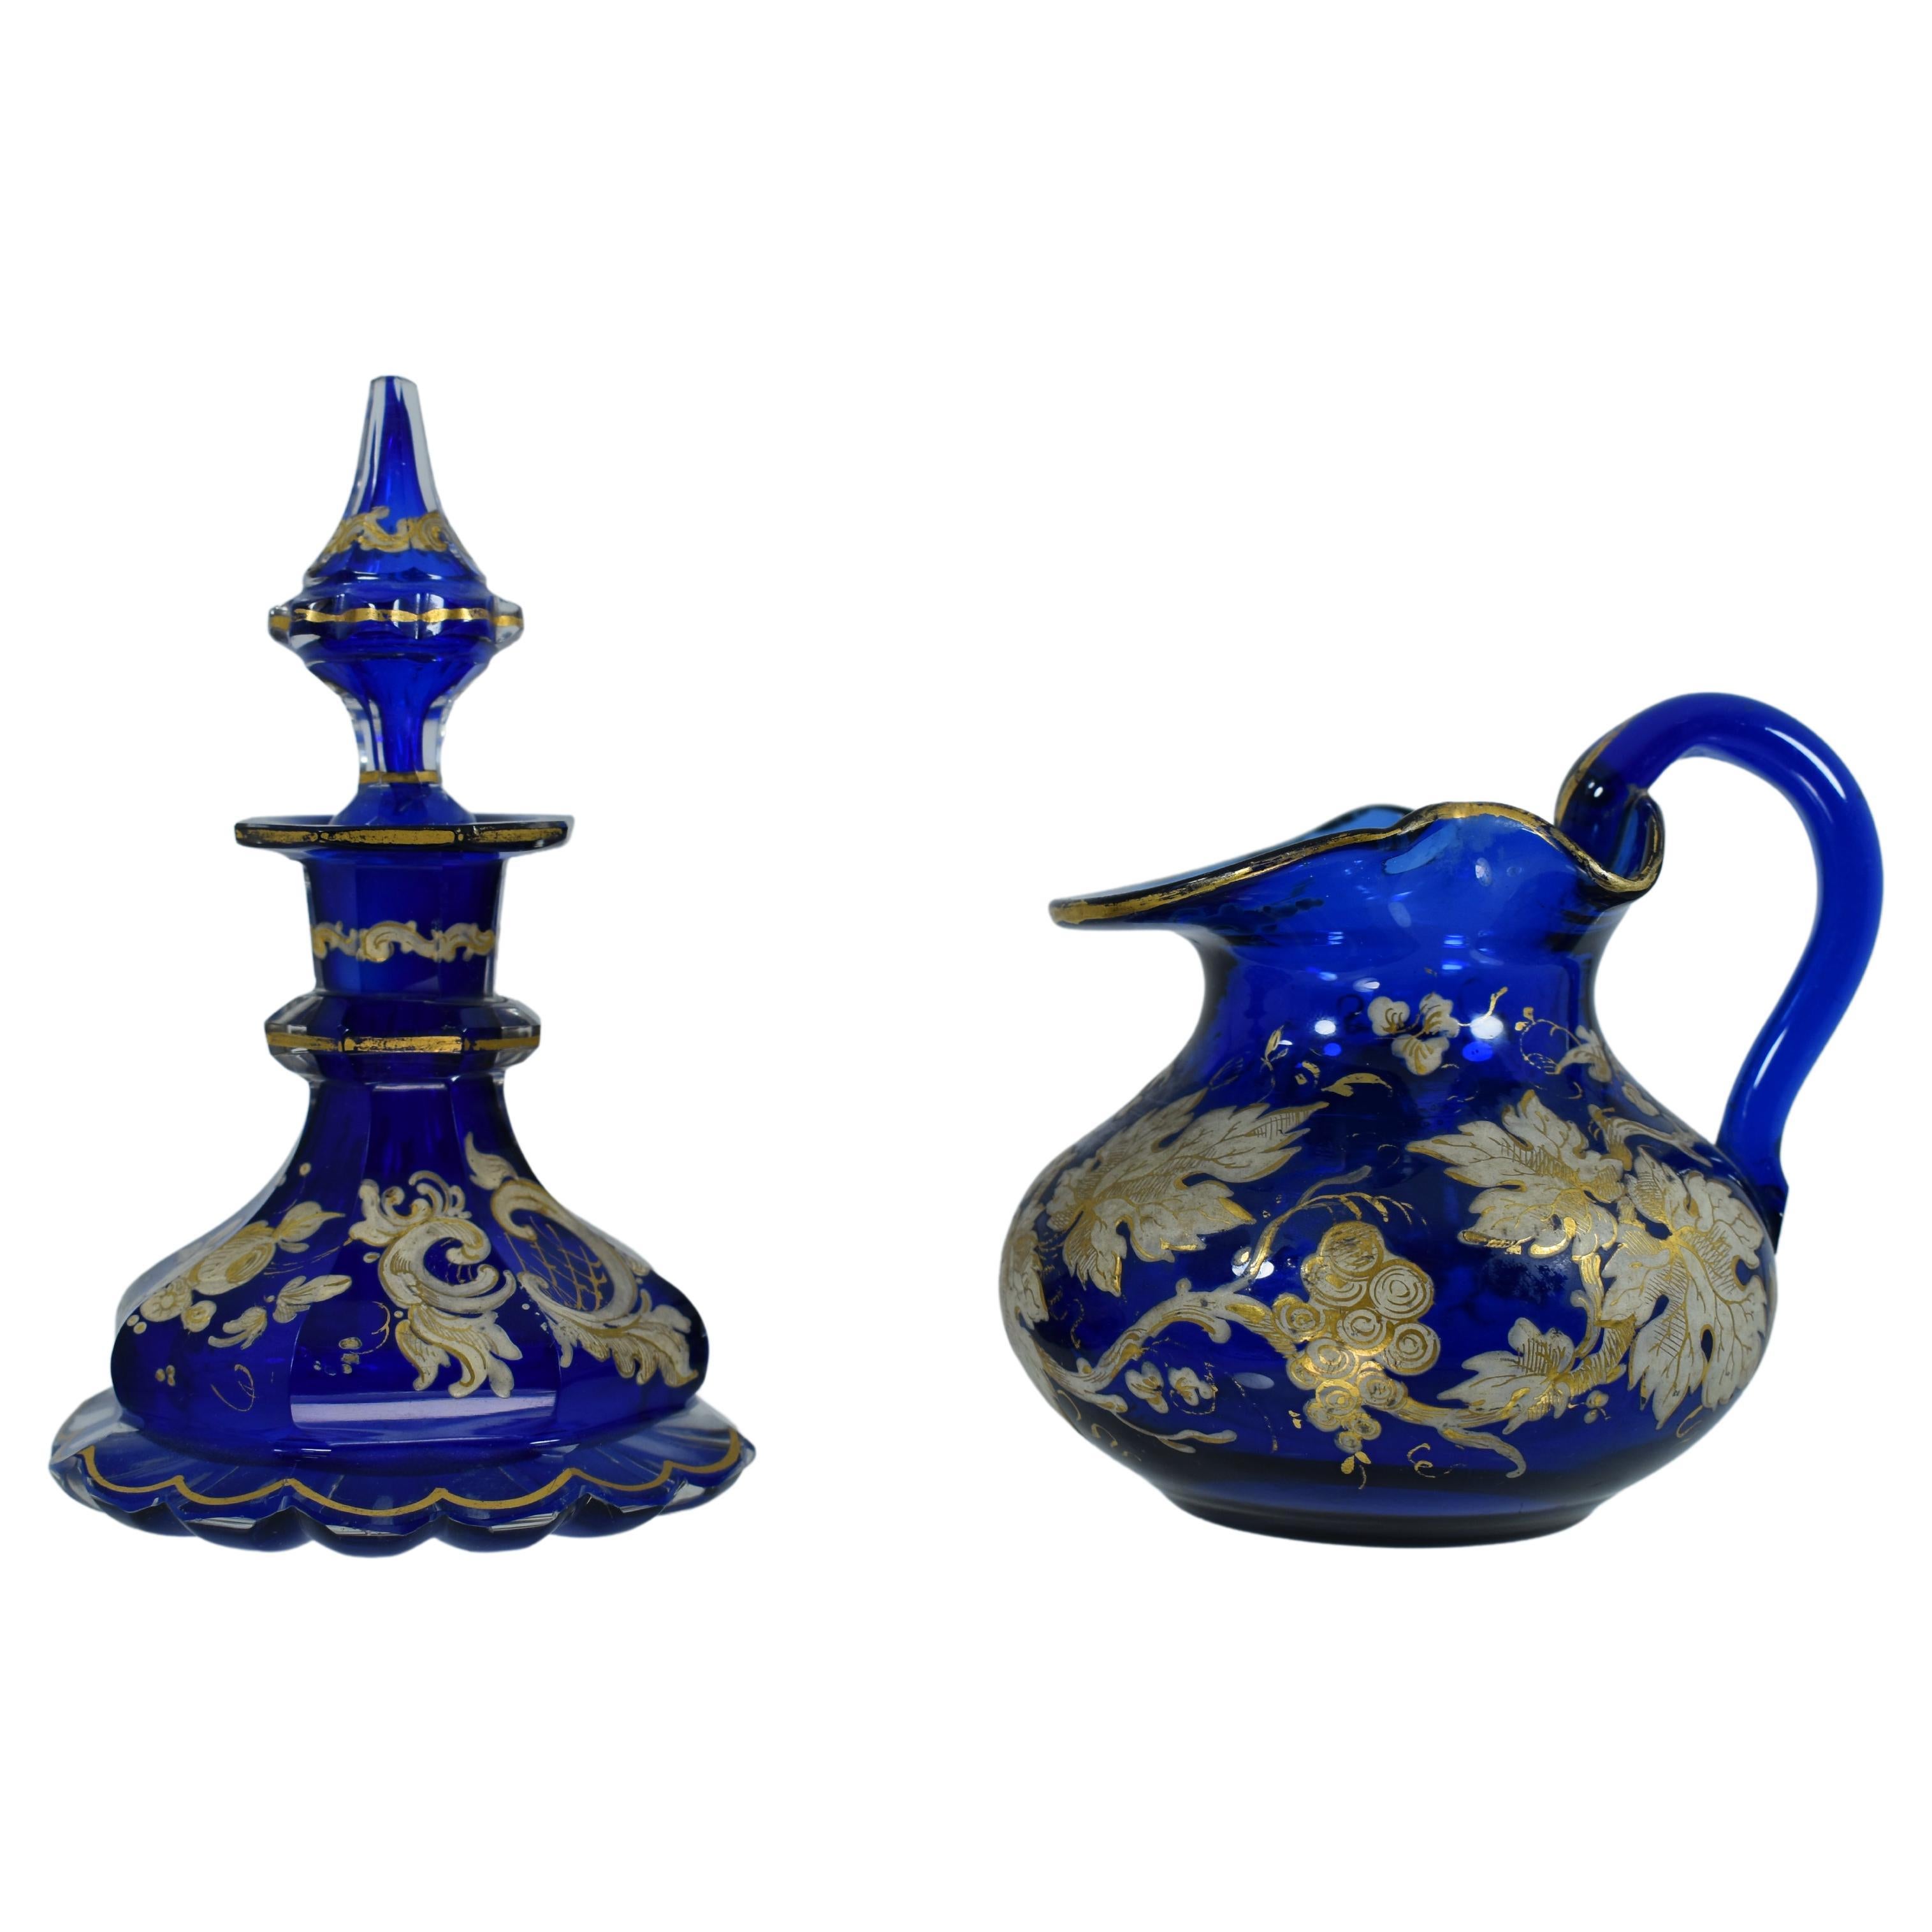 Antique Bohemian Cobalt Blue Enameled Glass Perfume Bottle and Jug, 19th Century For Sale